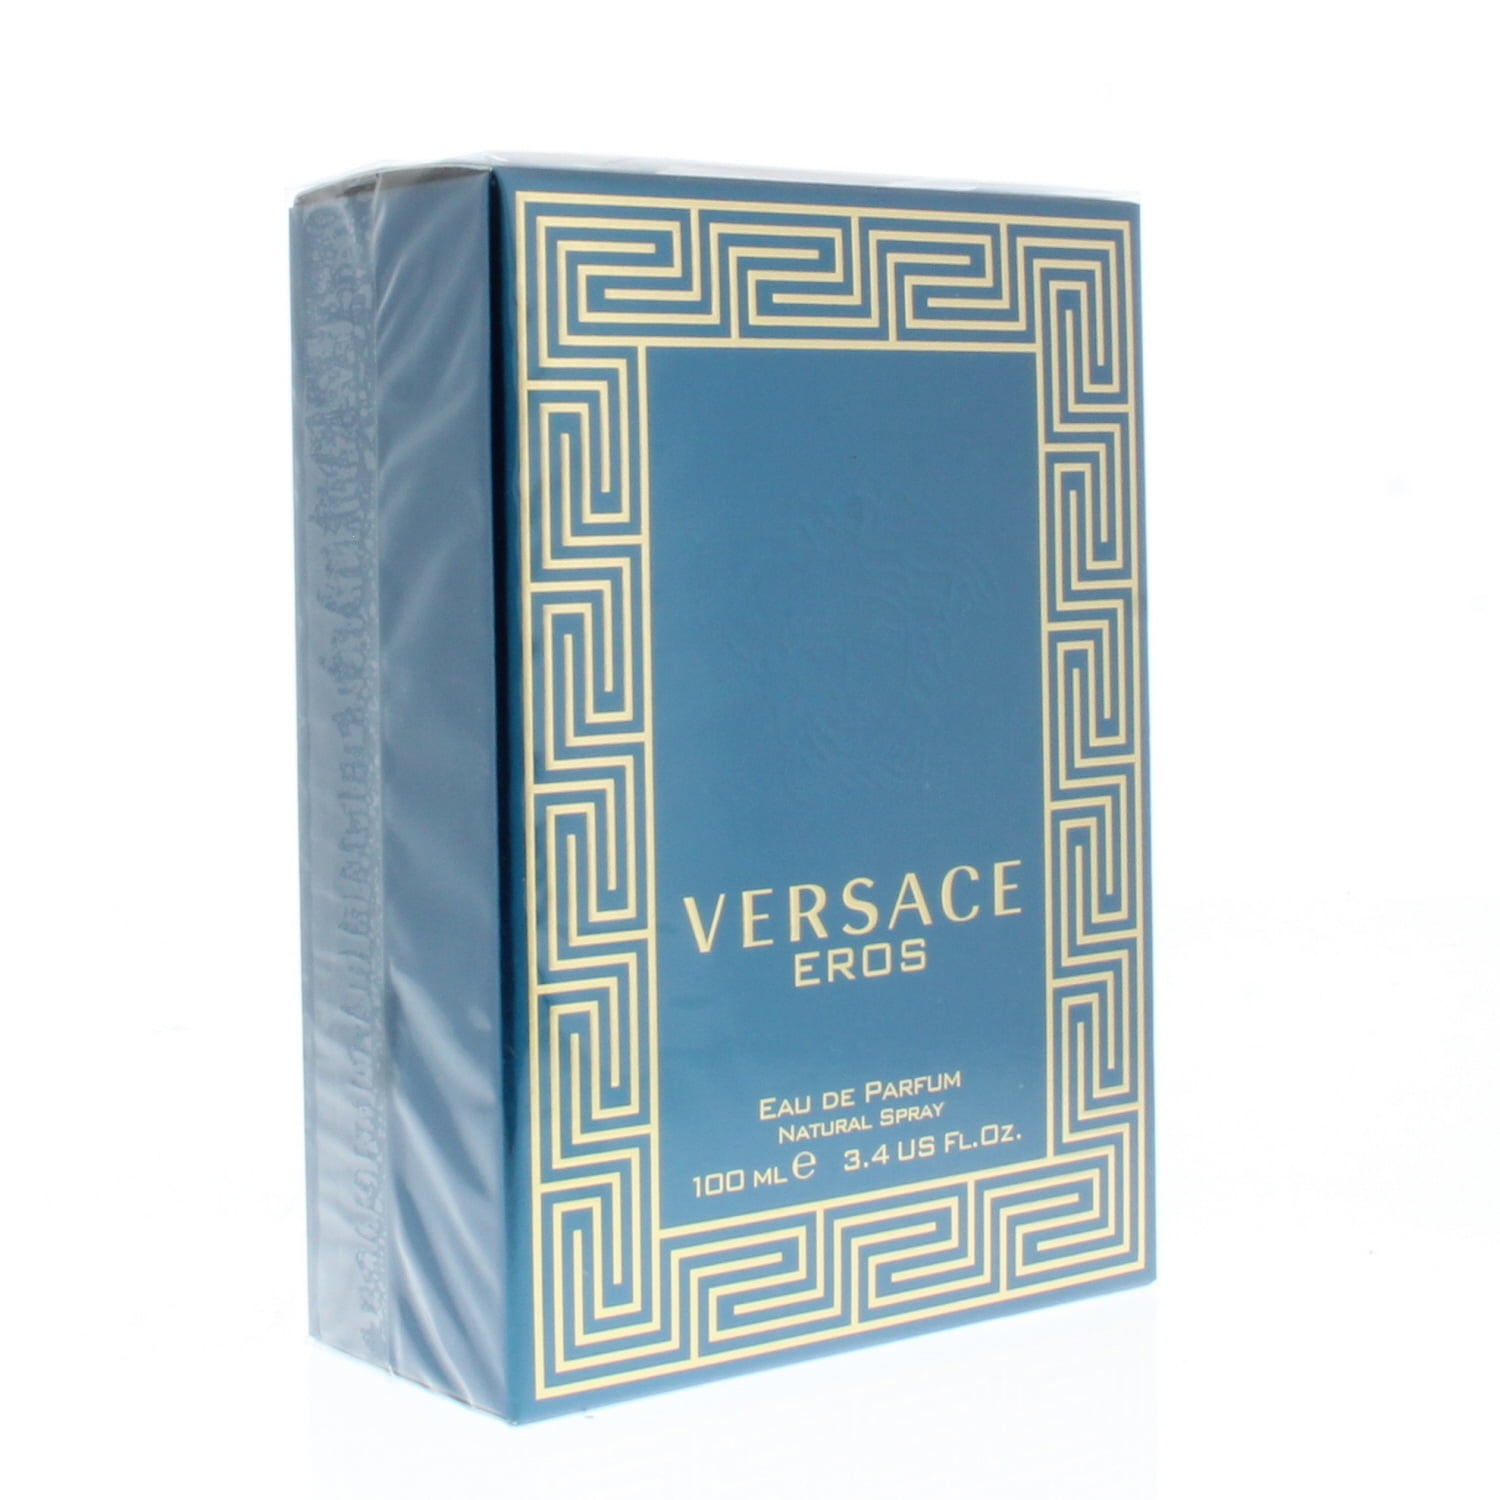 Versace Eros Eau De Parfum Spray for Men 3.4oz/100ml - image 1 of 3